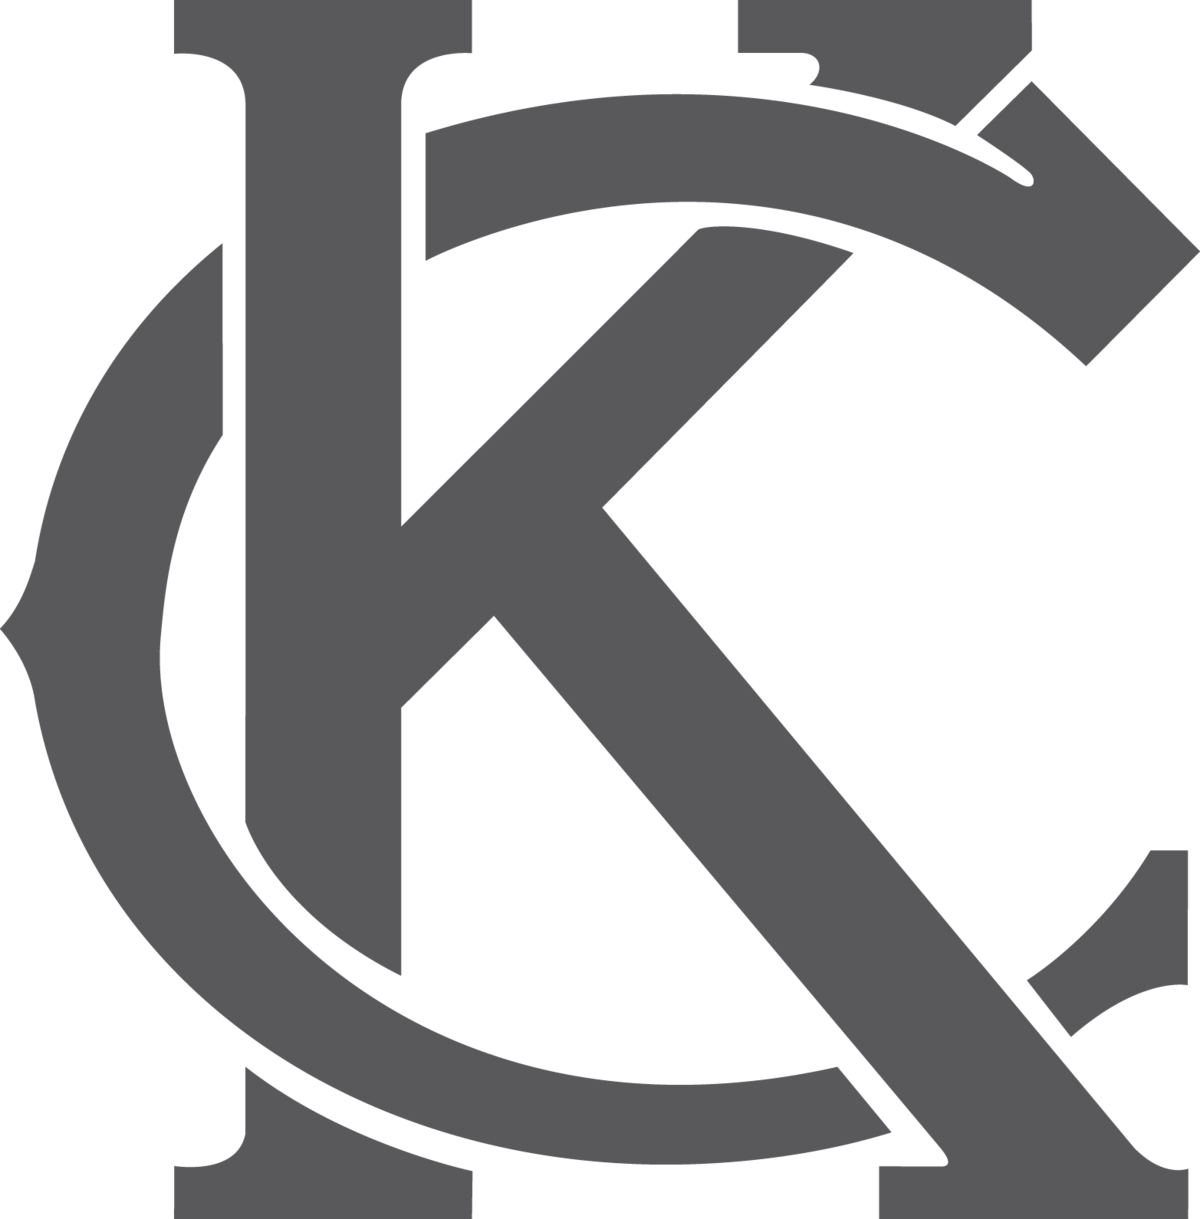 Kansas City launches new brand, logo - Kansas City Business Journal